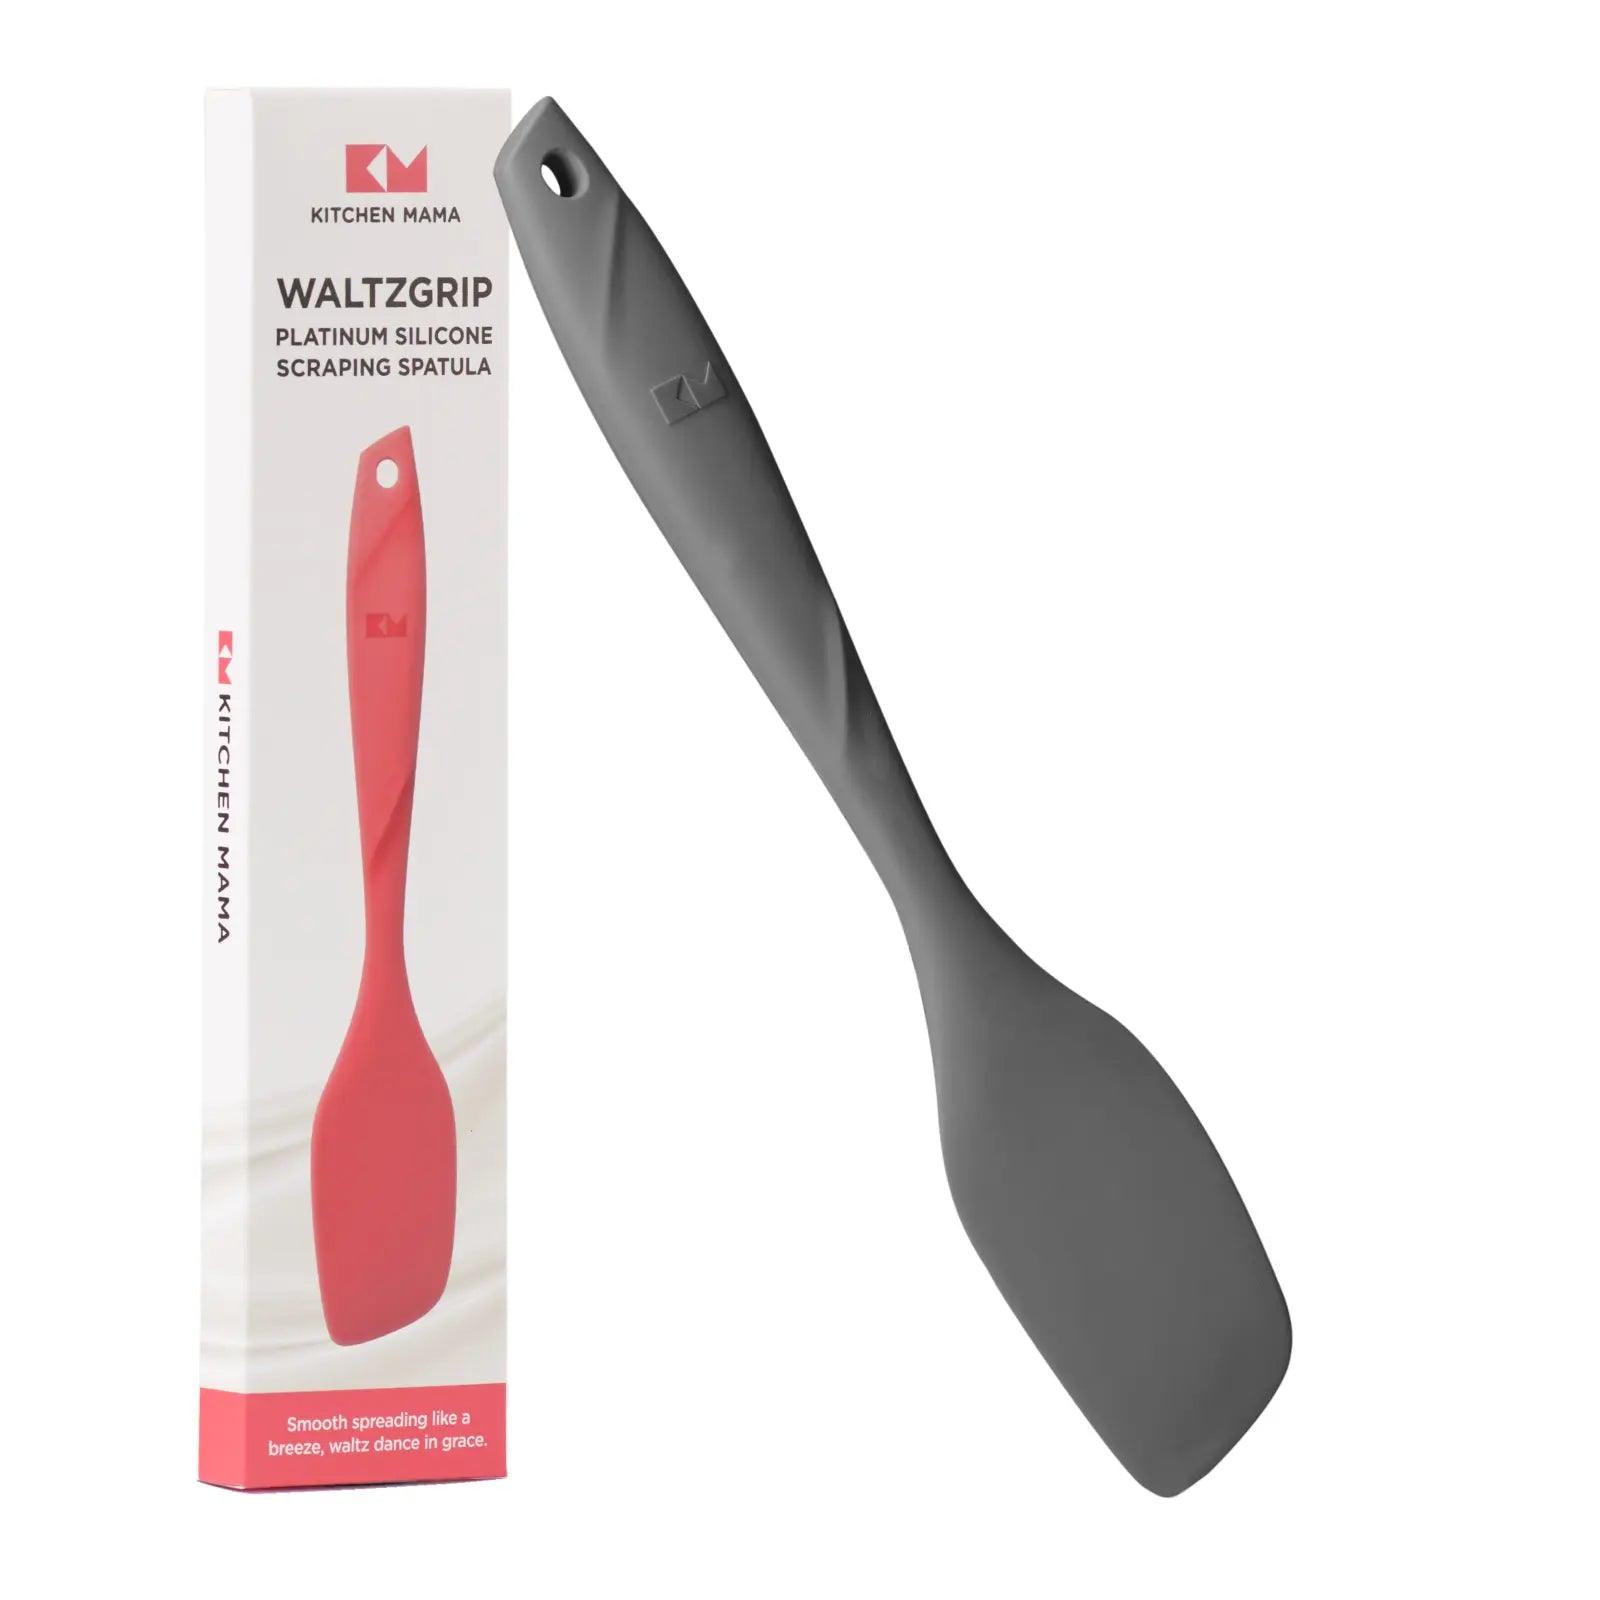 Kitchen Mama scraping spatula, Waltzgrip platinum silicone scraping spatula, metal gray